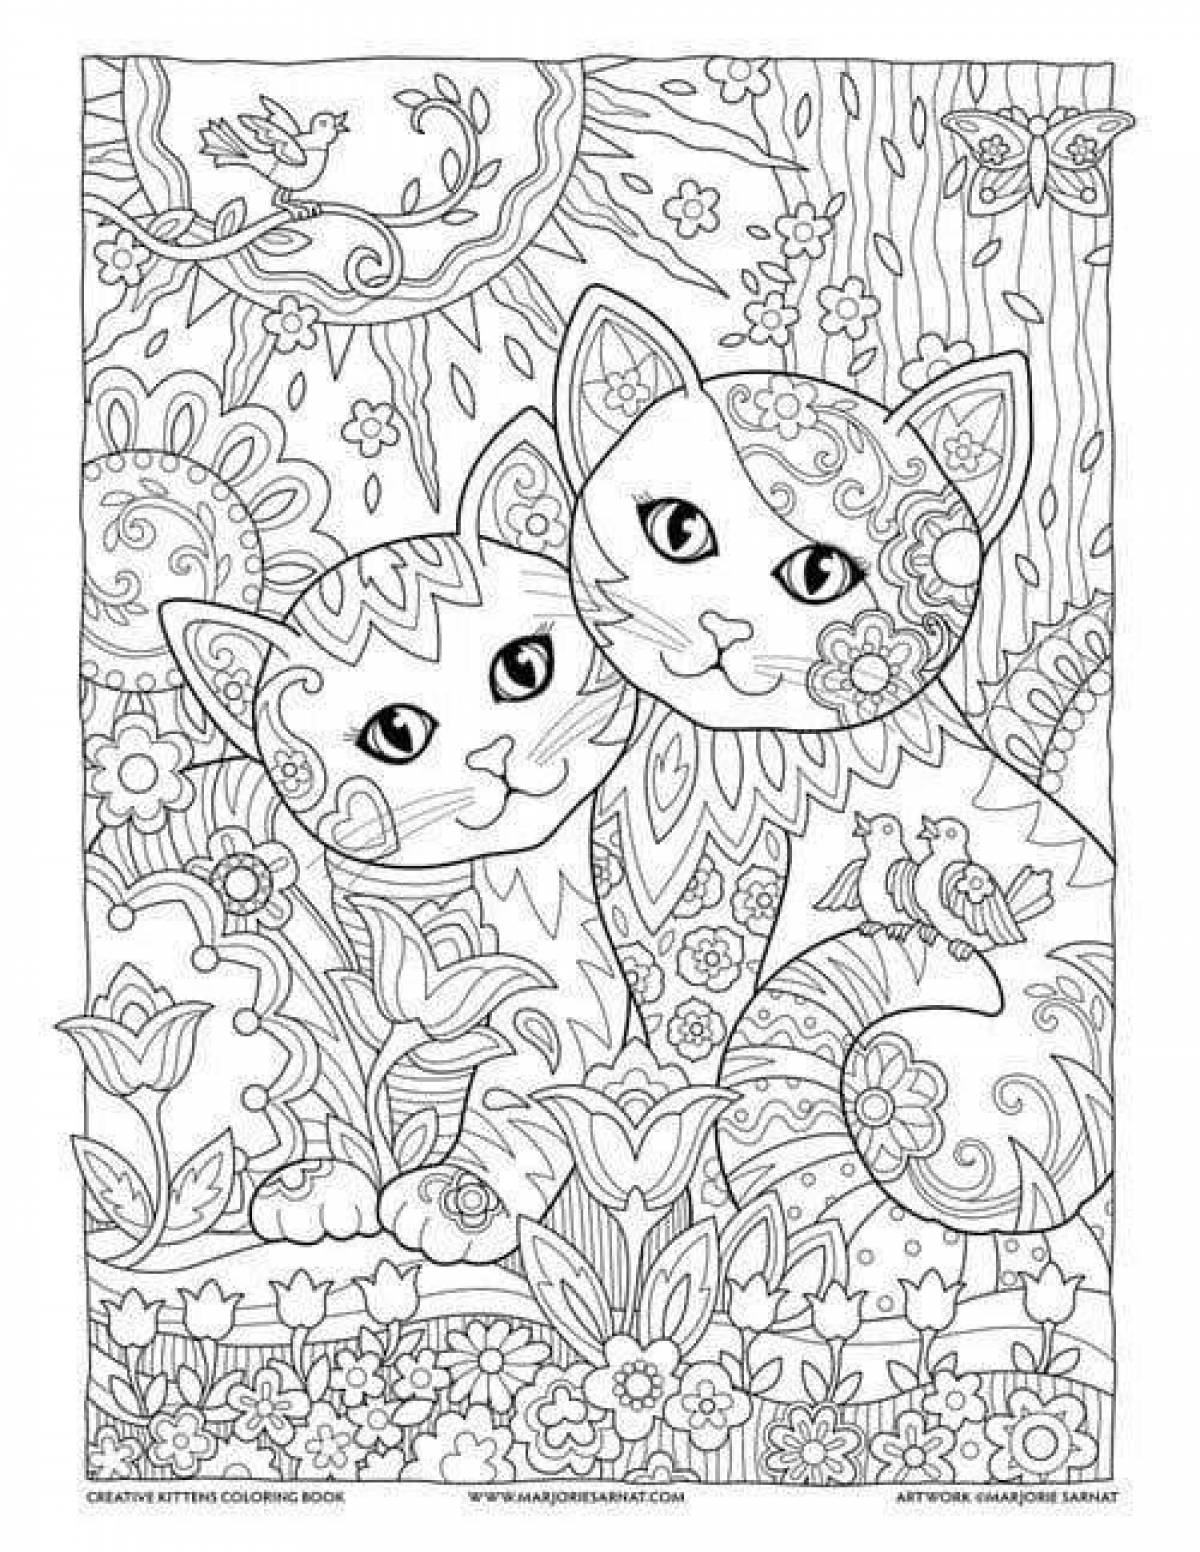 Cute anti-stress kitten coloring book